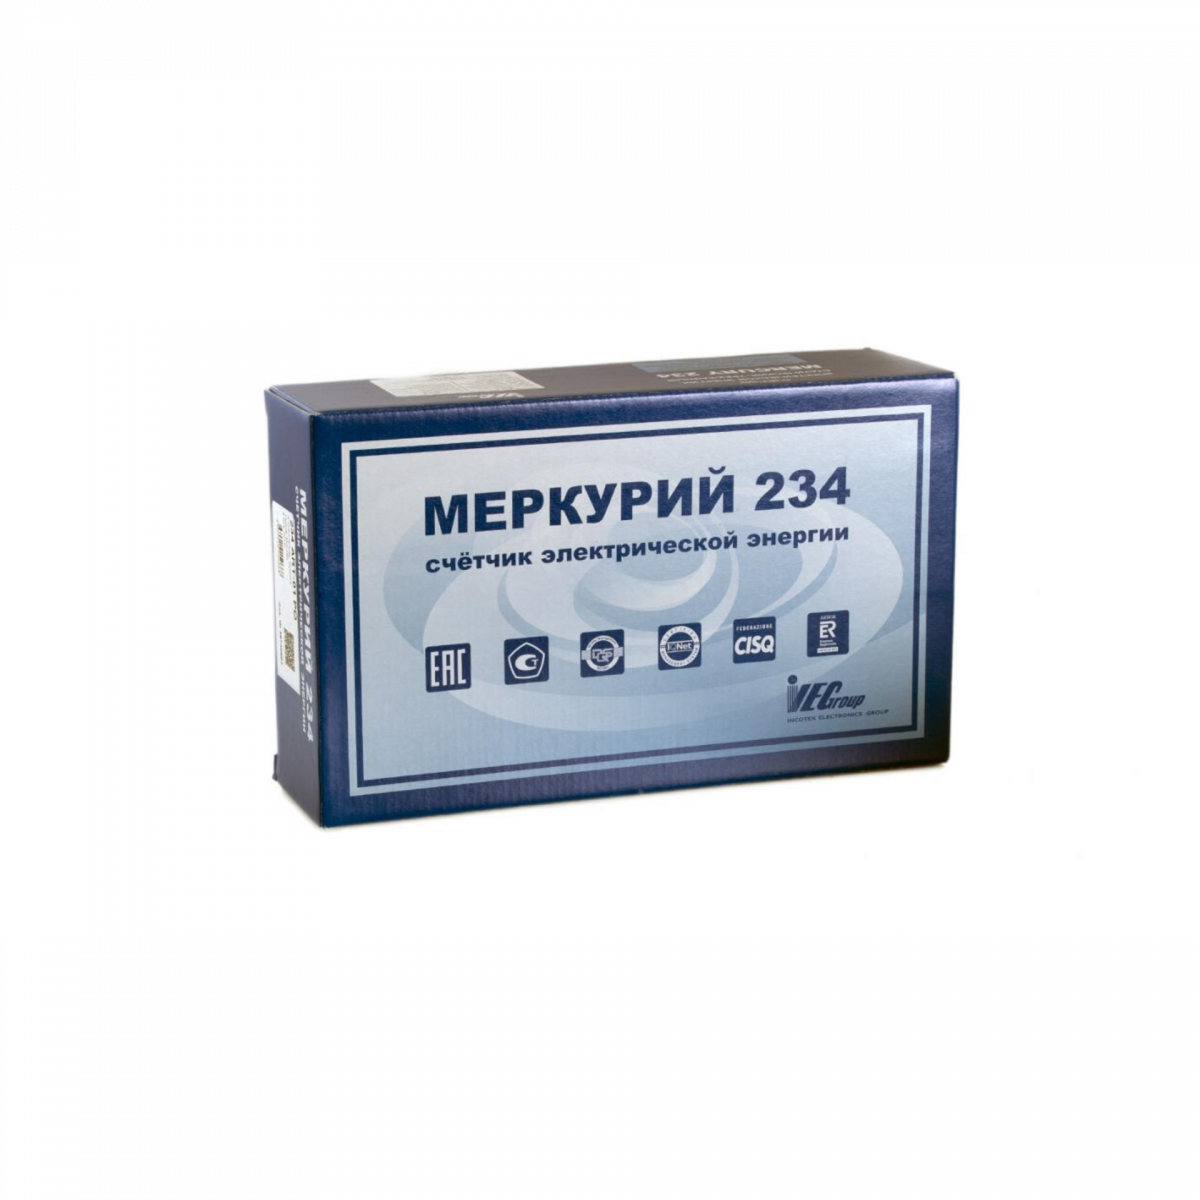 Счетчик "Меркурий" 234 ARTM-02 (D)PОBR.G5 5-100А, класс точности 1,0/2,0, многотарифный, оптопорт, RS485, NB-IoT